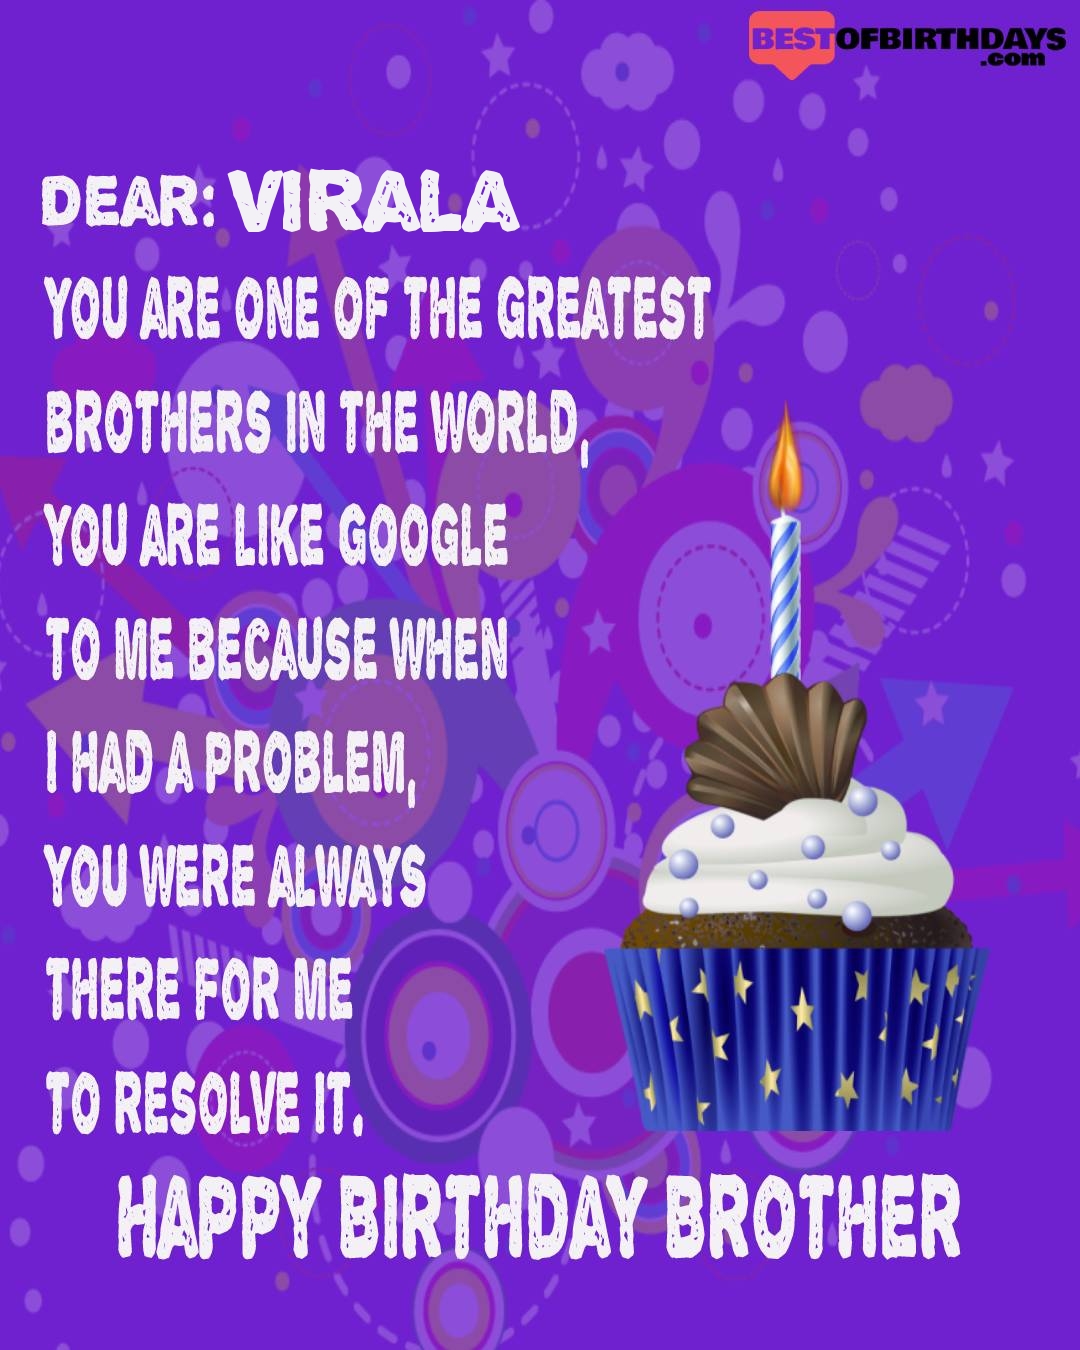 Happy birthday virala bhai brother bro